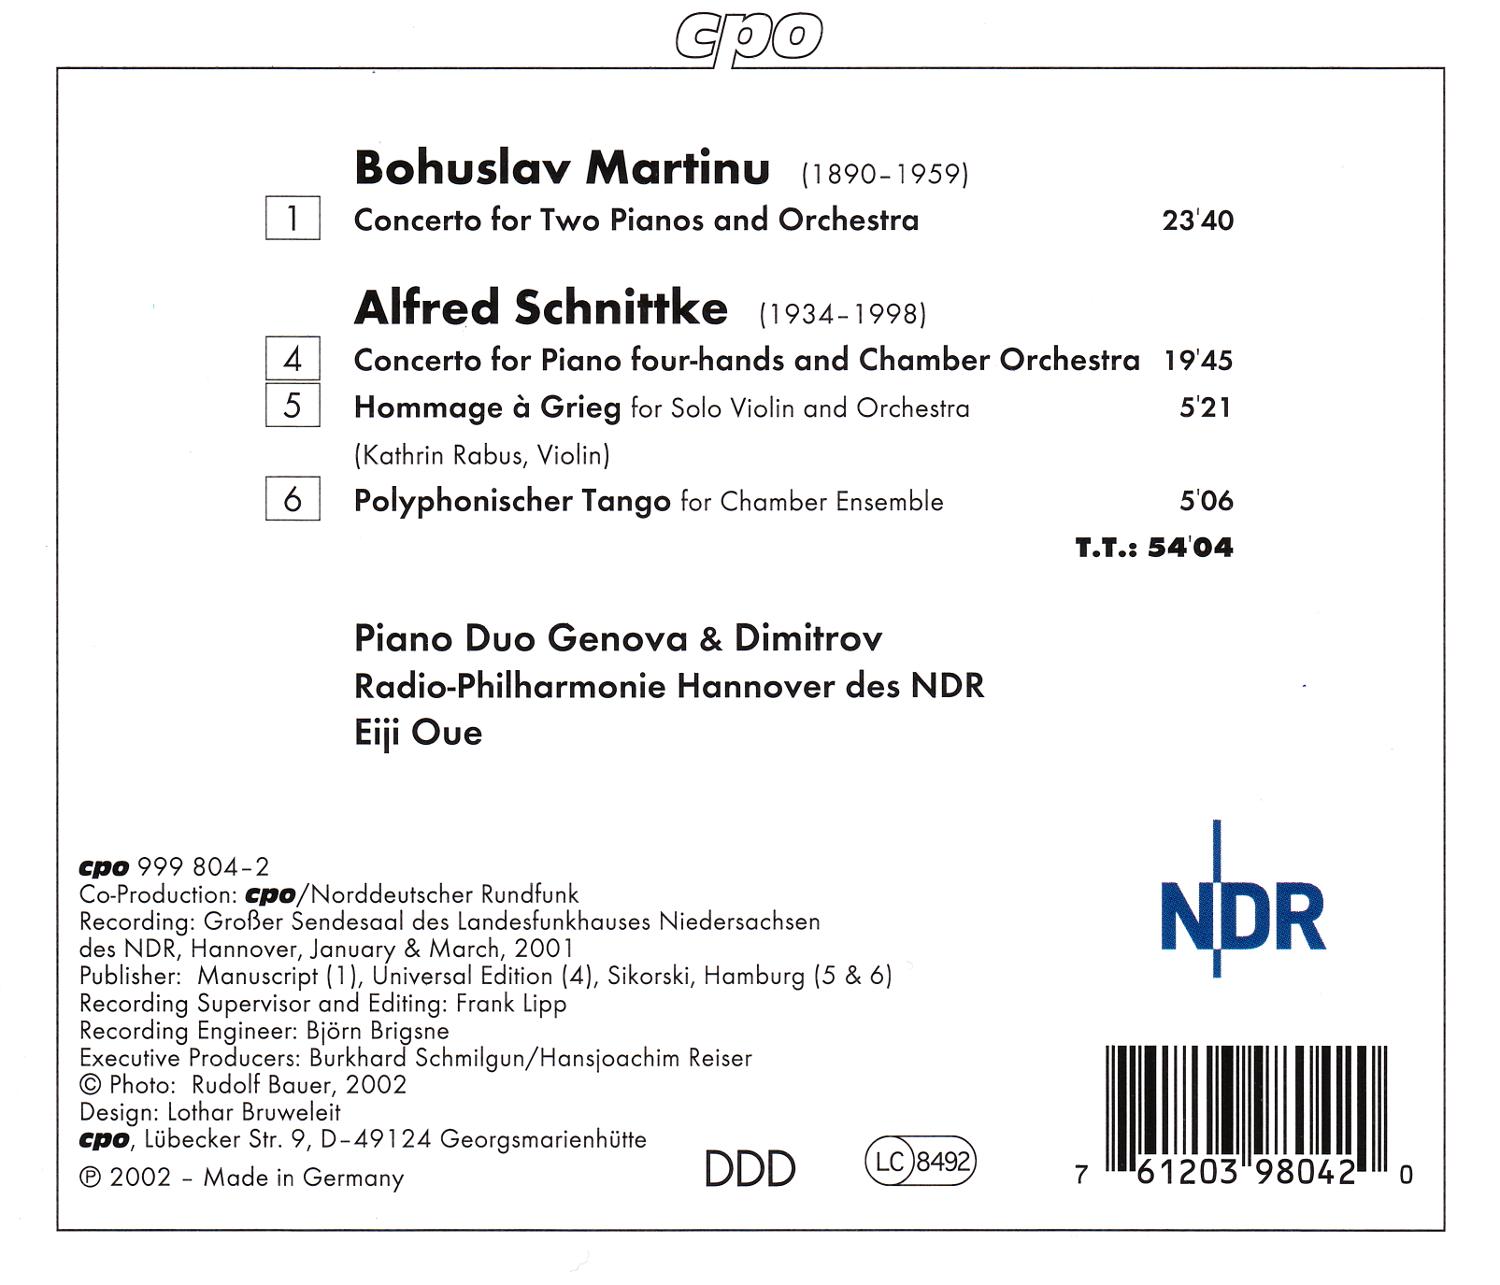 Bohuslav Martinu & Alfred Schnittke • Concertos for Two Pianos (cpo 999 804-2) |Back Inlay